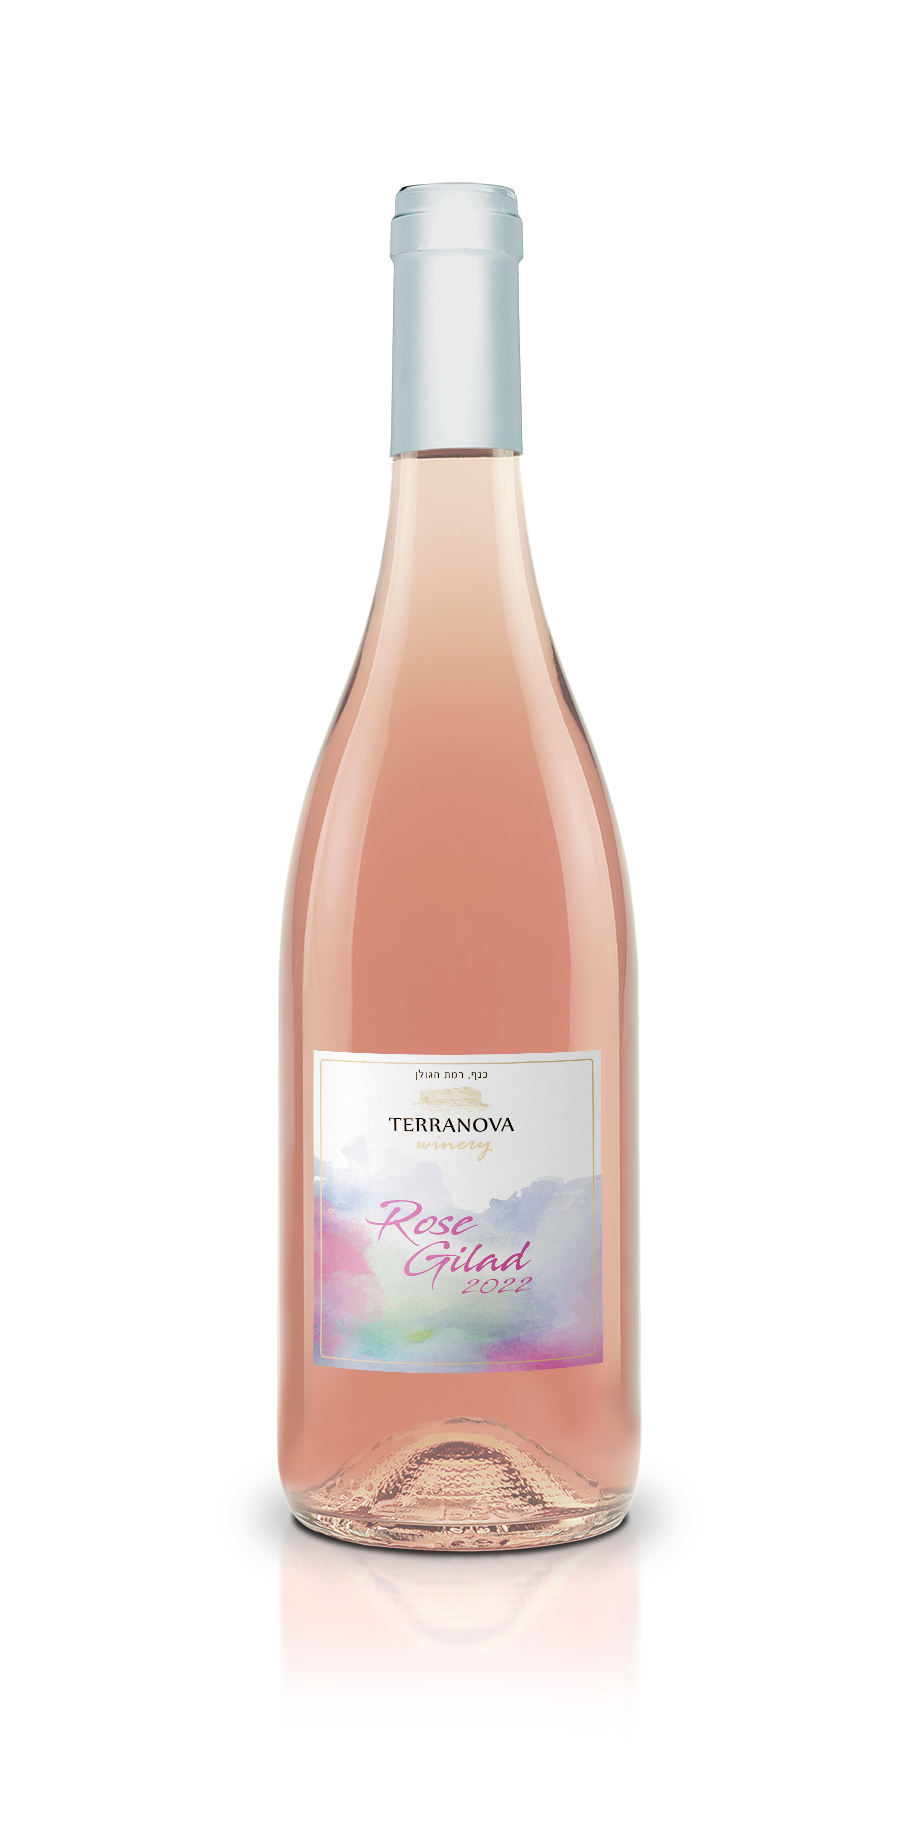 Rose wine - Gilad 2022 Terra Nova